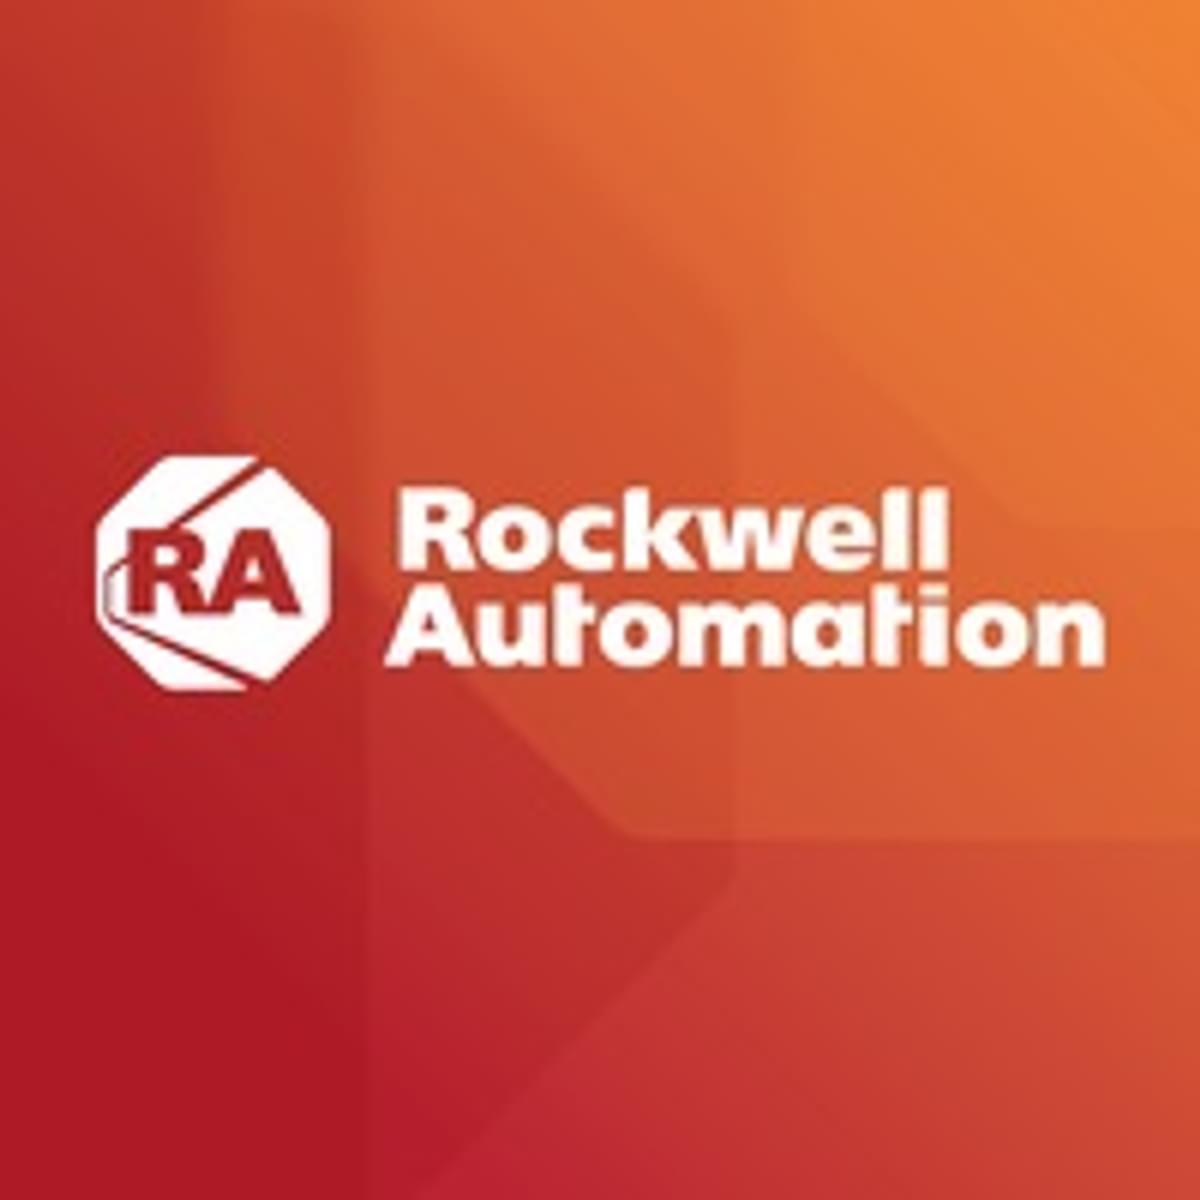 Rockwell Automation neemt Fiix over image